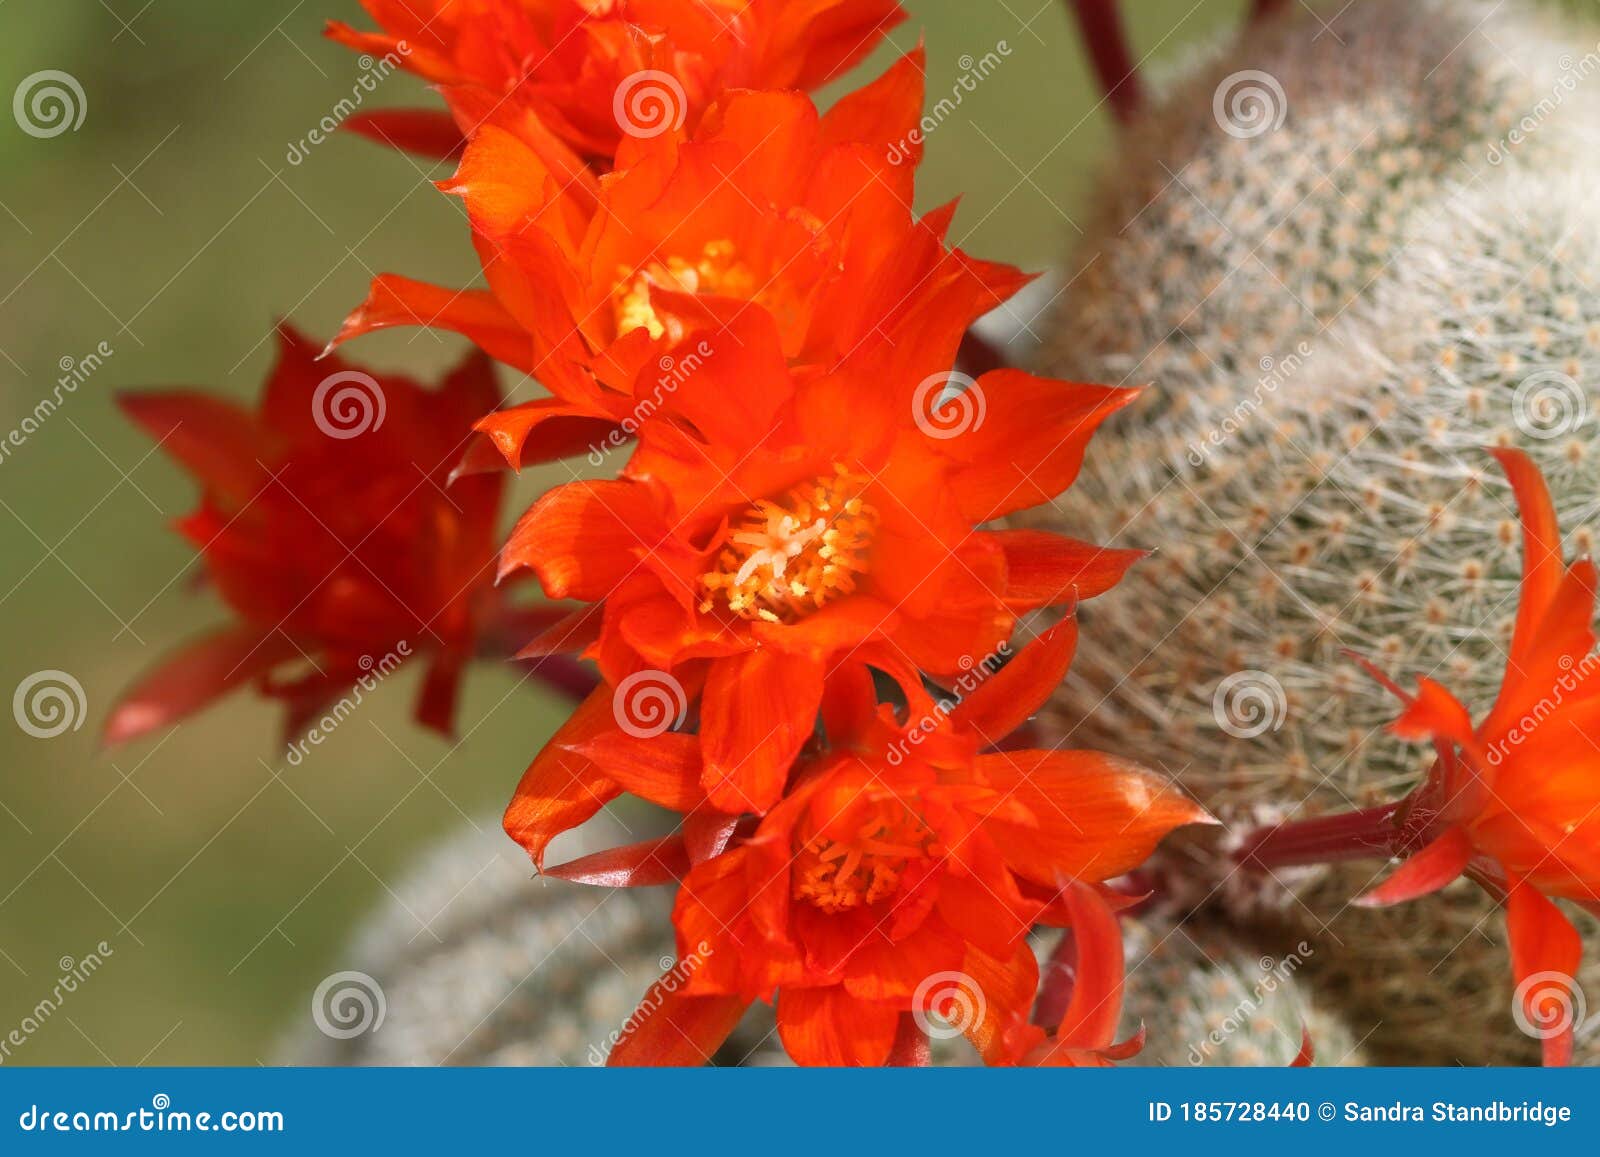 a group of pretty flowering cactus, rebutia lima naranja.